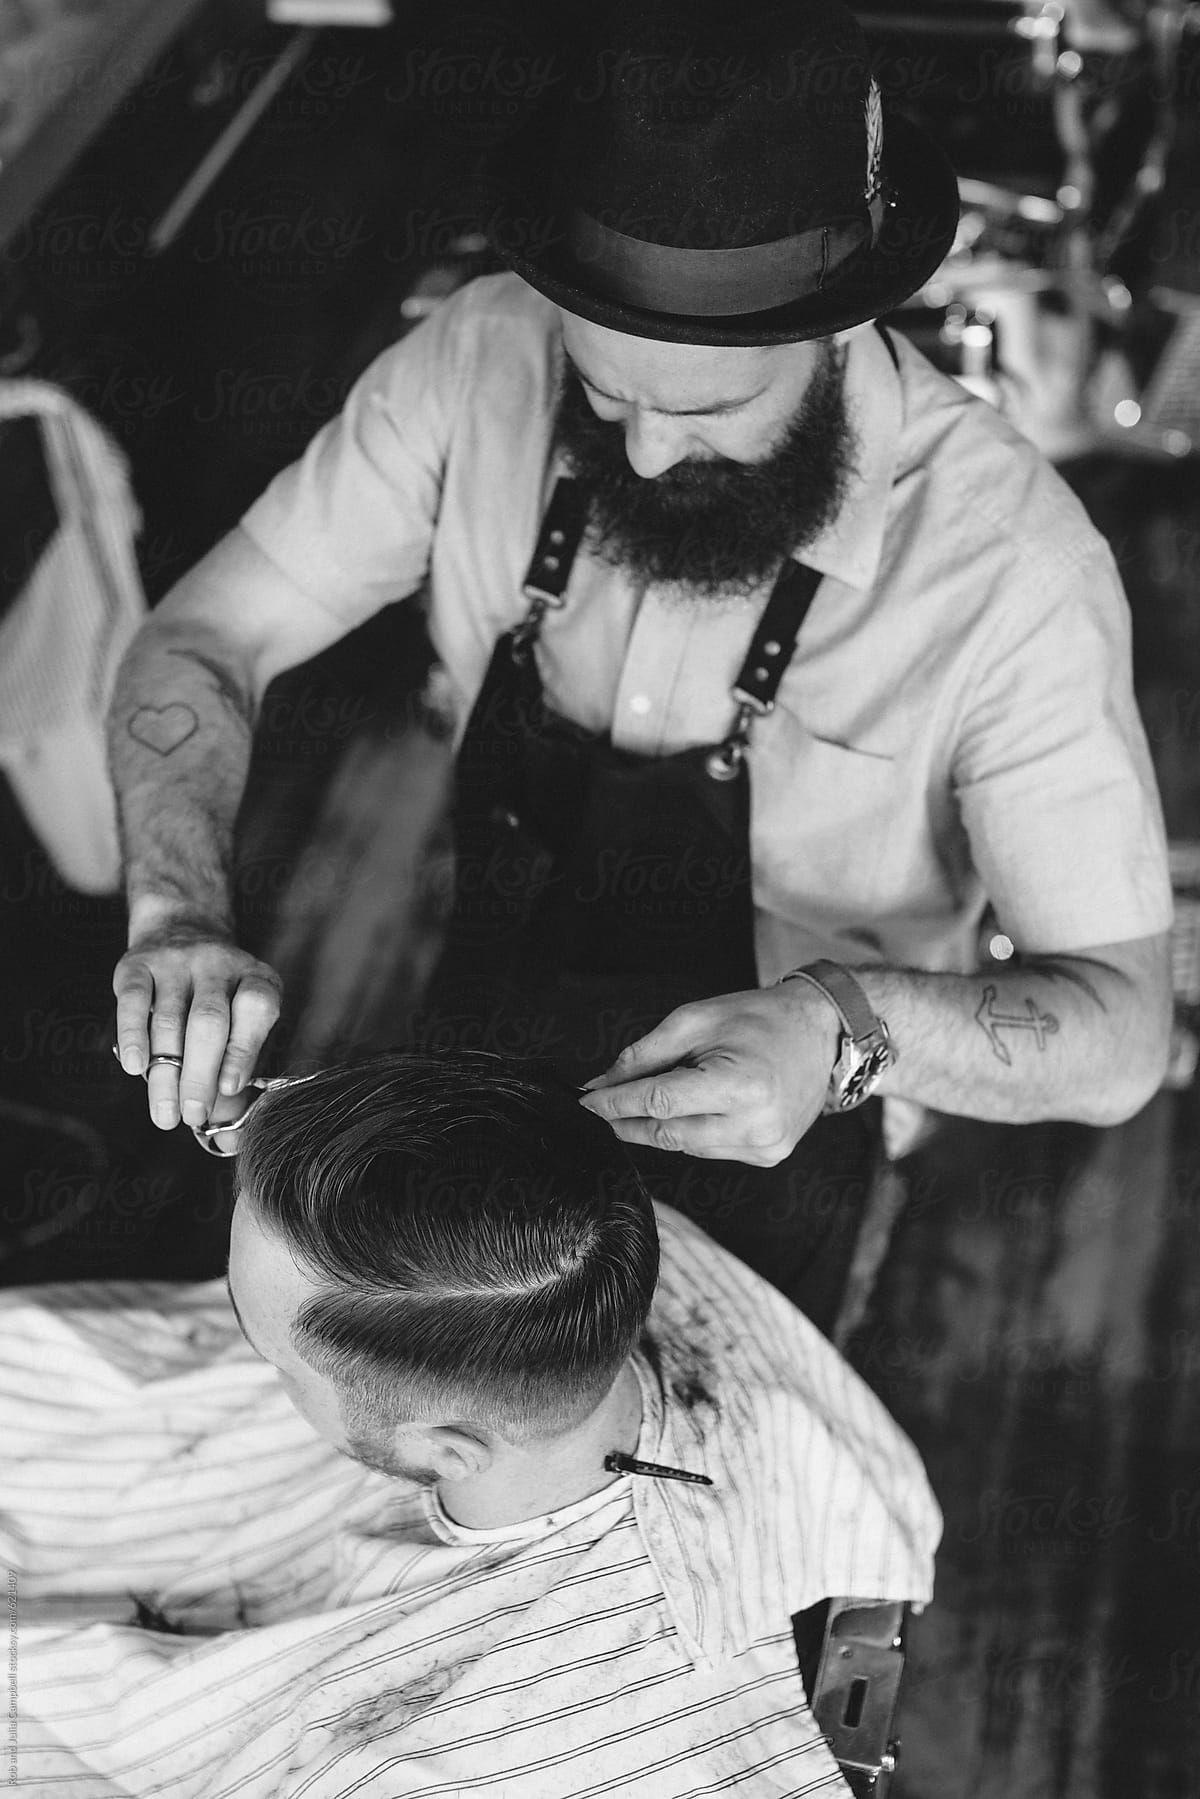 Stylish modern barber giving man a classic haircut - top view